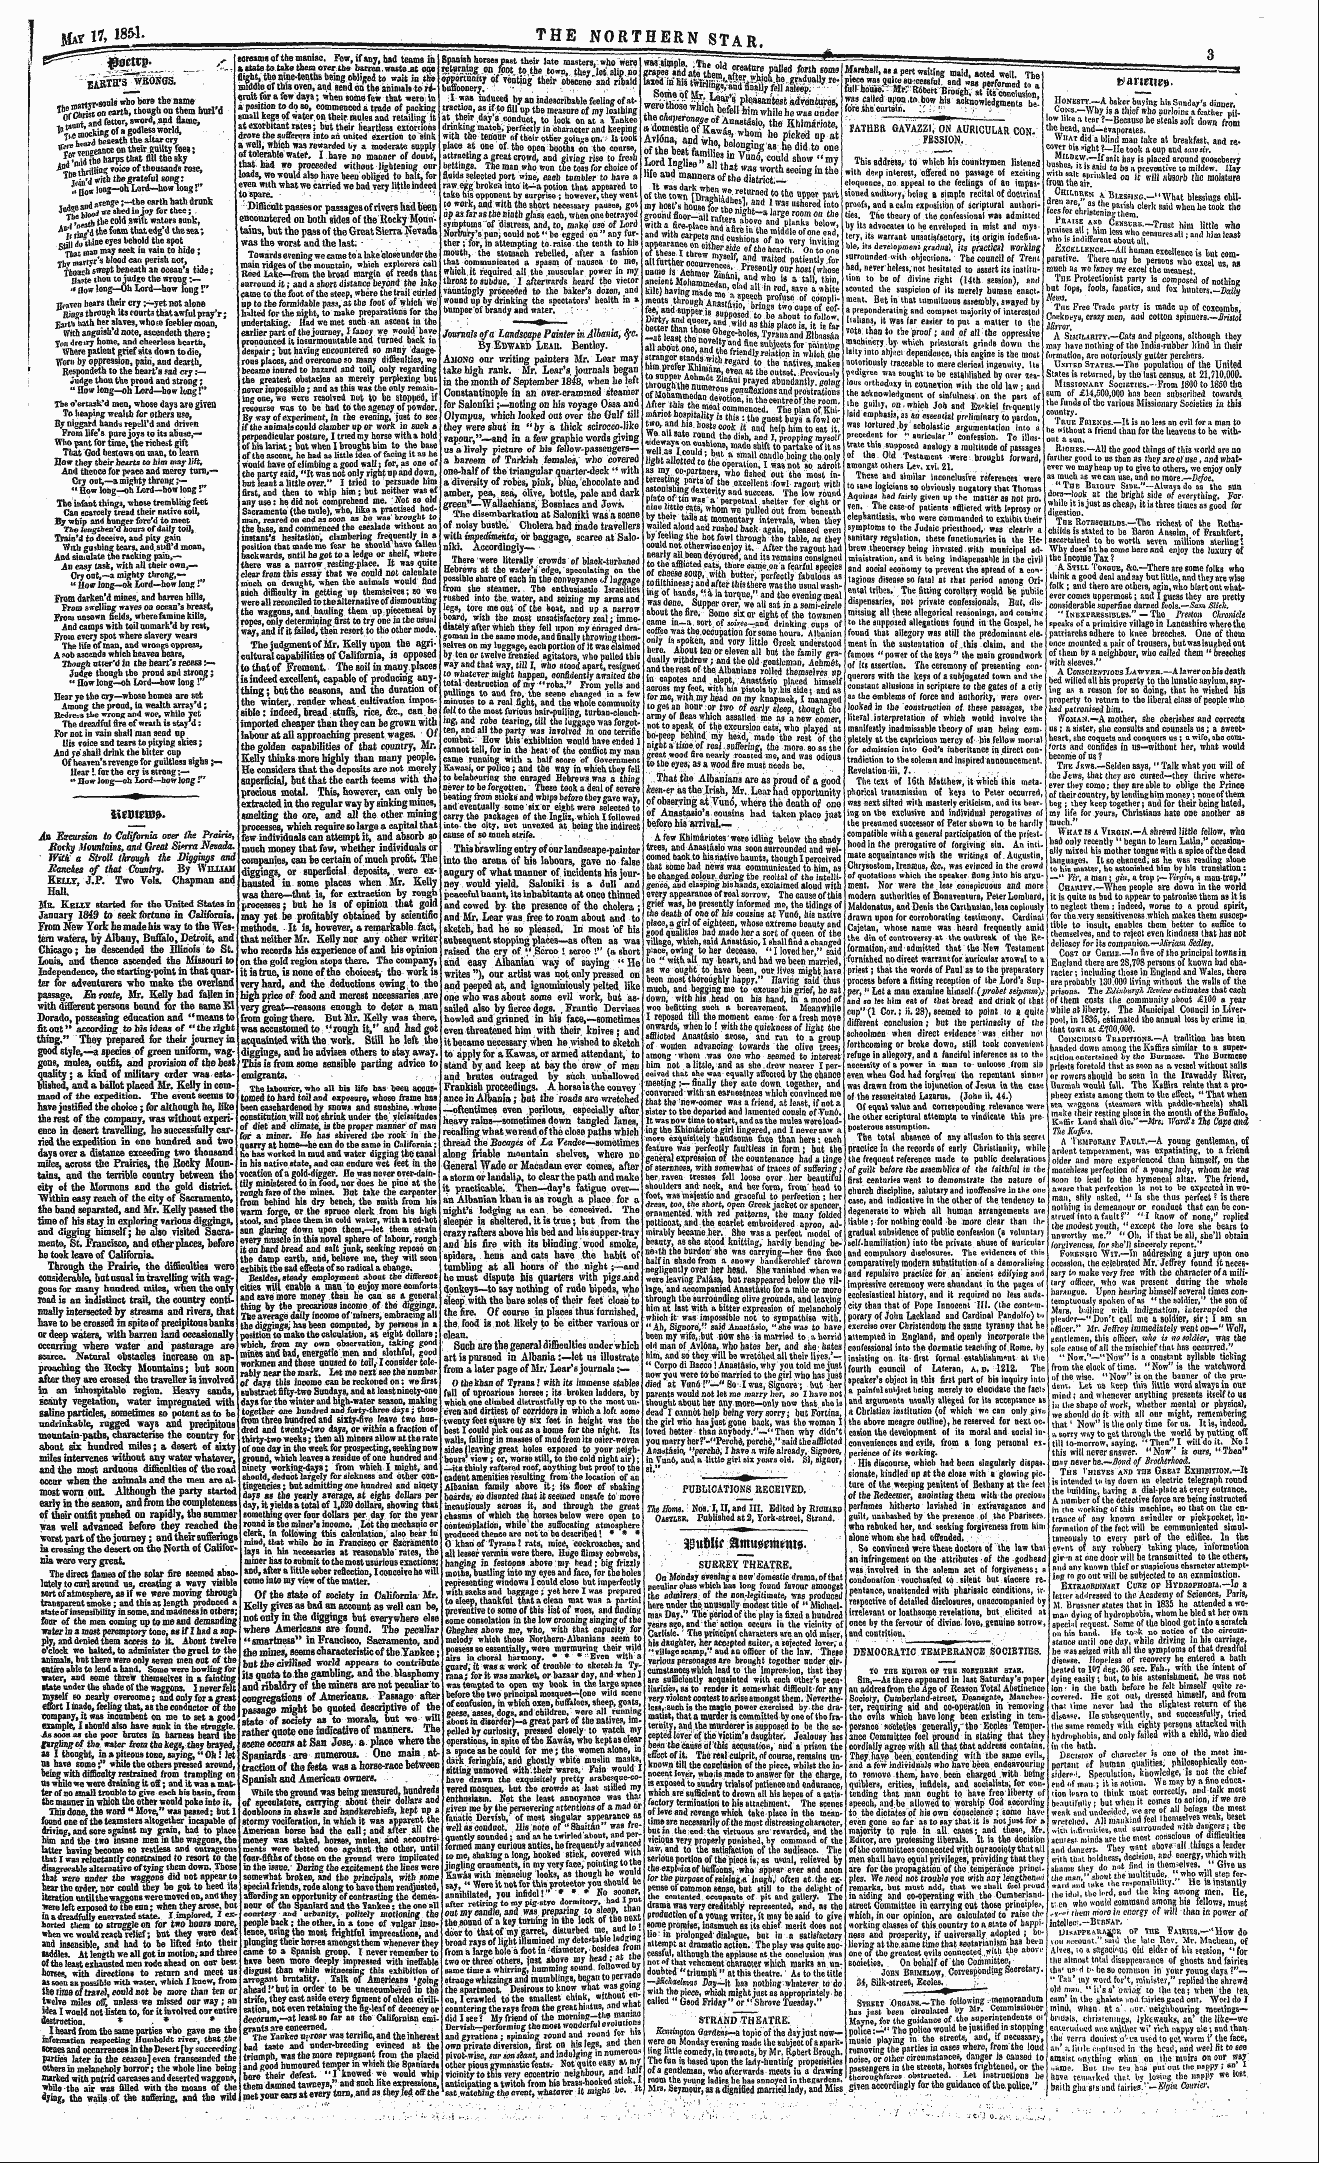 Northern Star (1837-1852): jS F Y, 2nd edition - Sememe